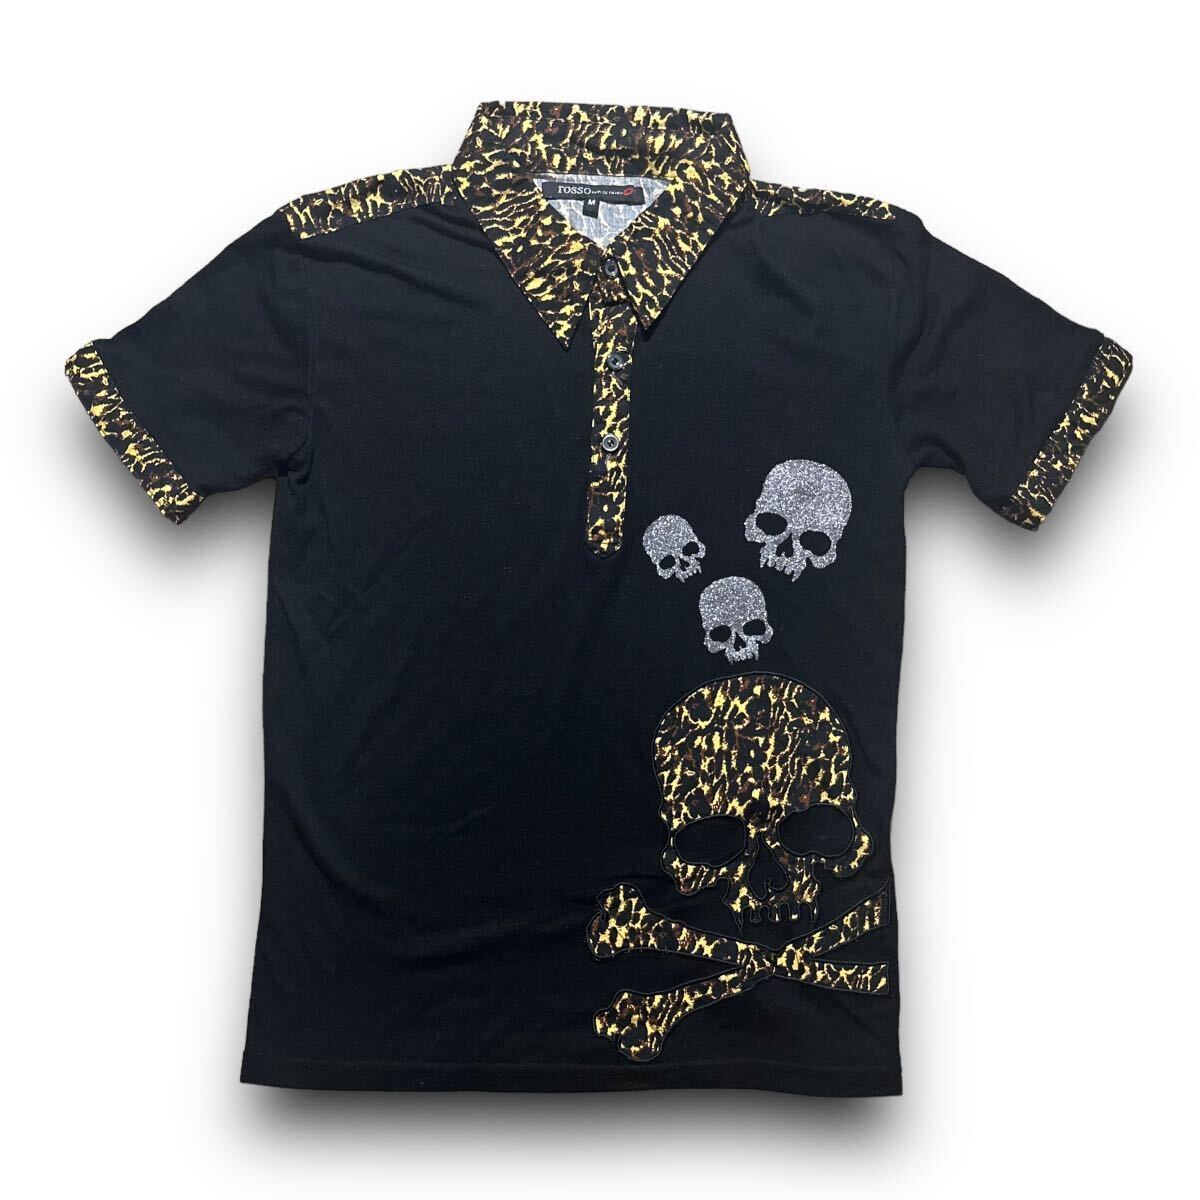 Rare 00s Japanese Label Y2K design skull shirt 14th addiction share spirit ifsixwasnine kmrii lgb goa obelisk backlash civarize の画像1